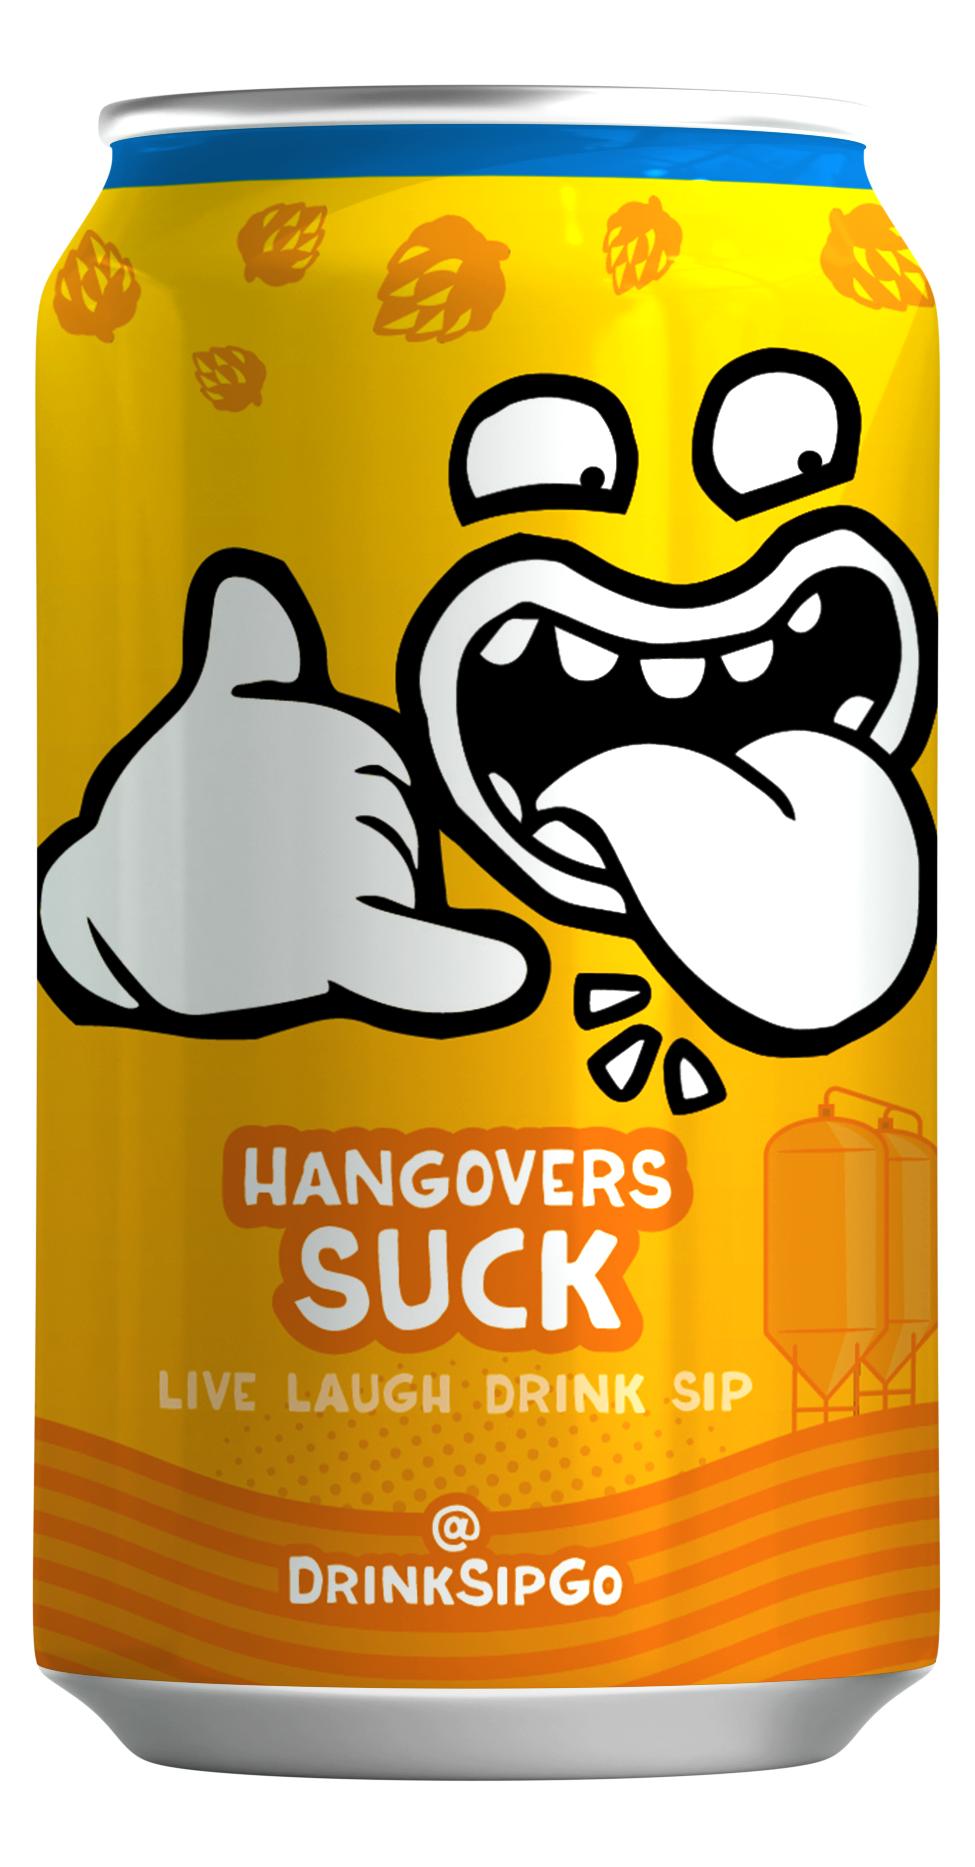 DrinkSip - Hazy IPA - 6 pack